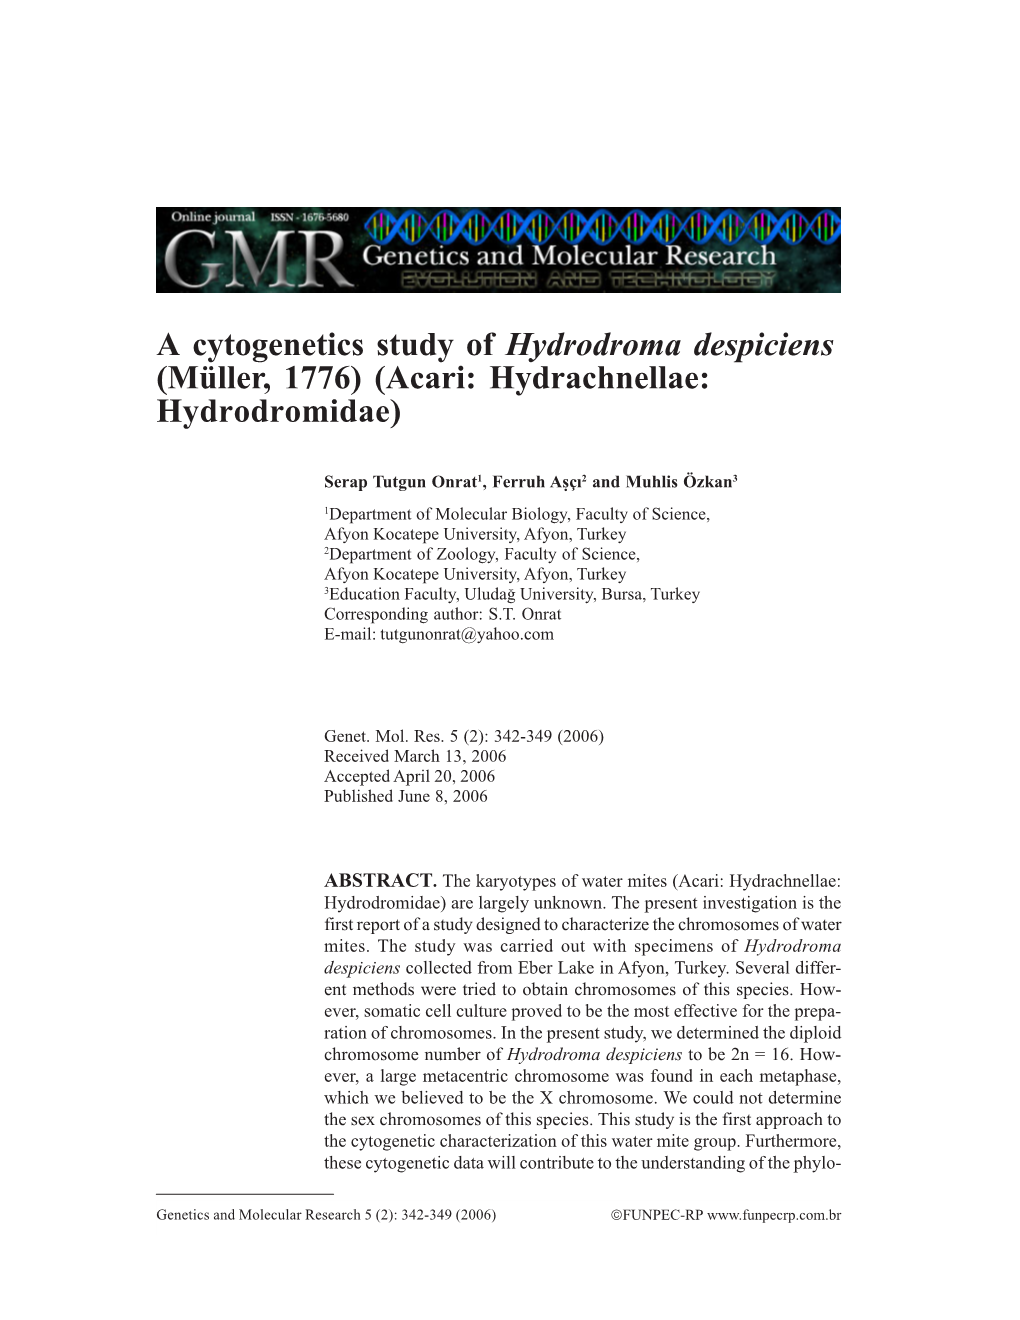 A Cytogenetics Study of Hydrodroma Despiciens (Muller, 1776) (Acari